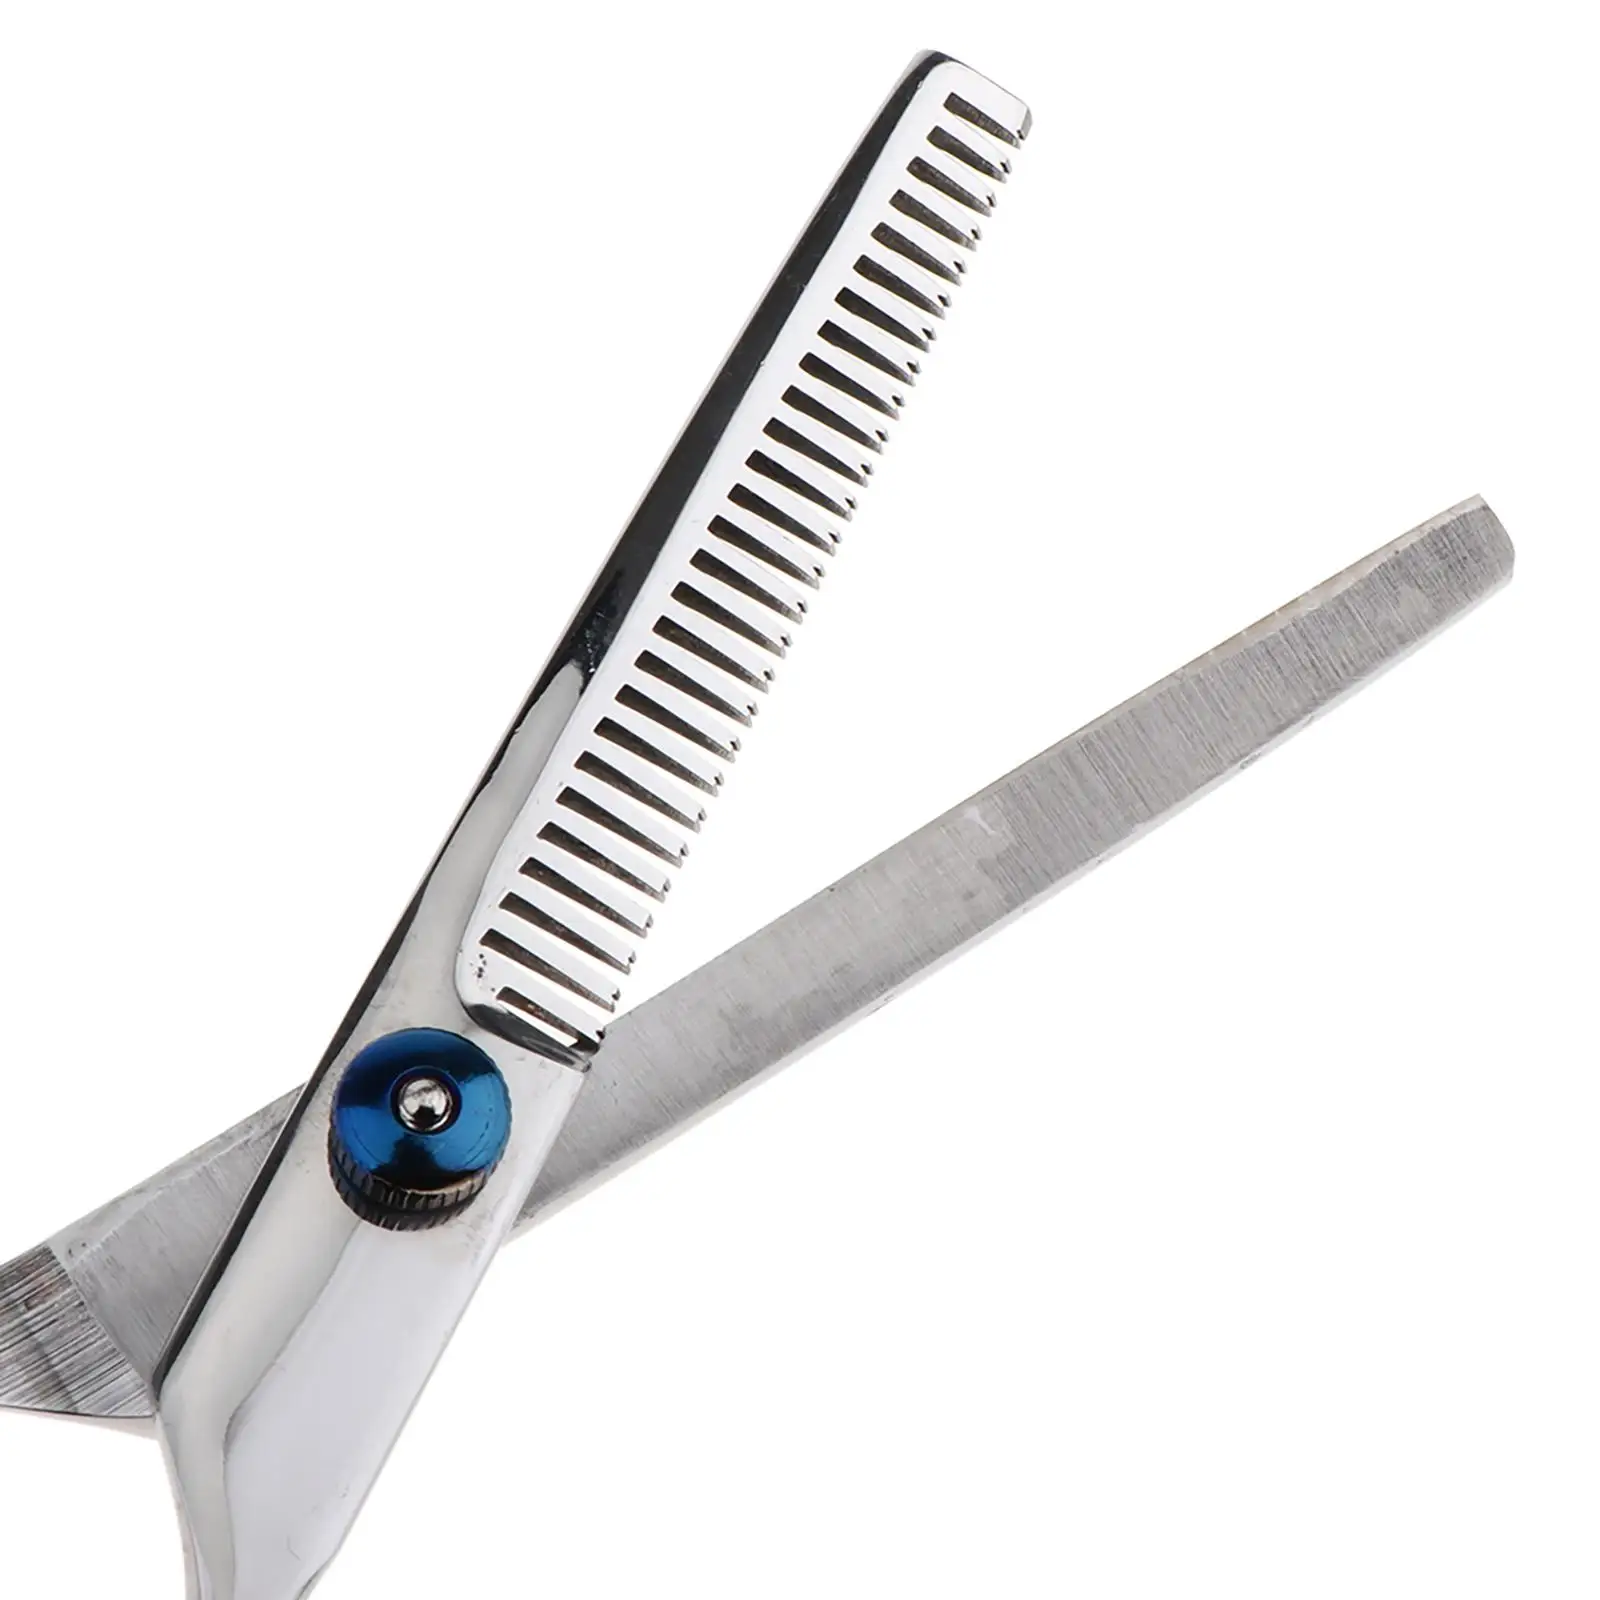 Professional Hair s Barber Salon for Women Men , Made of Stainless Steel